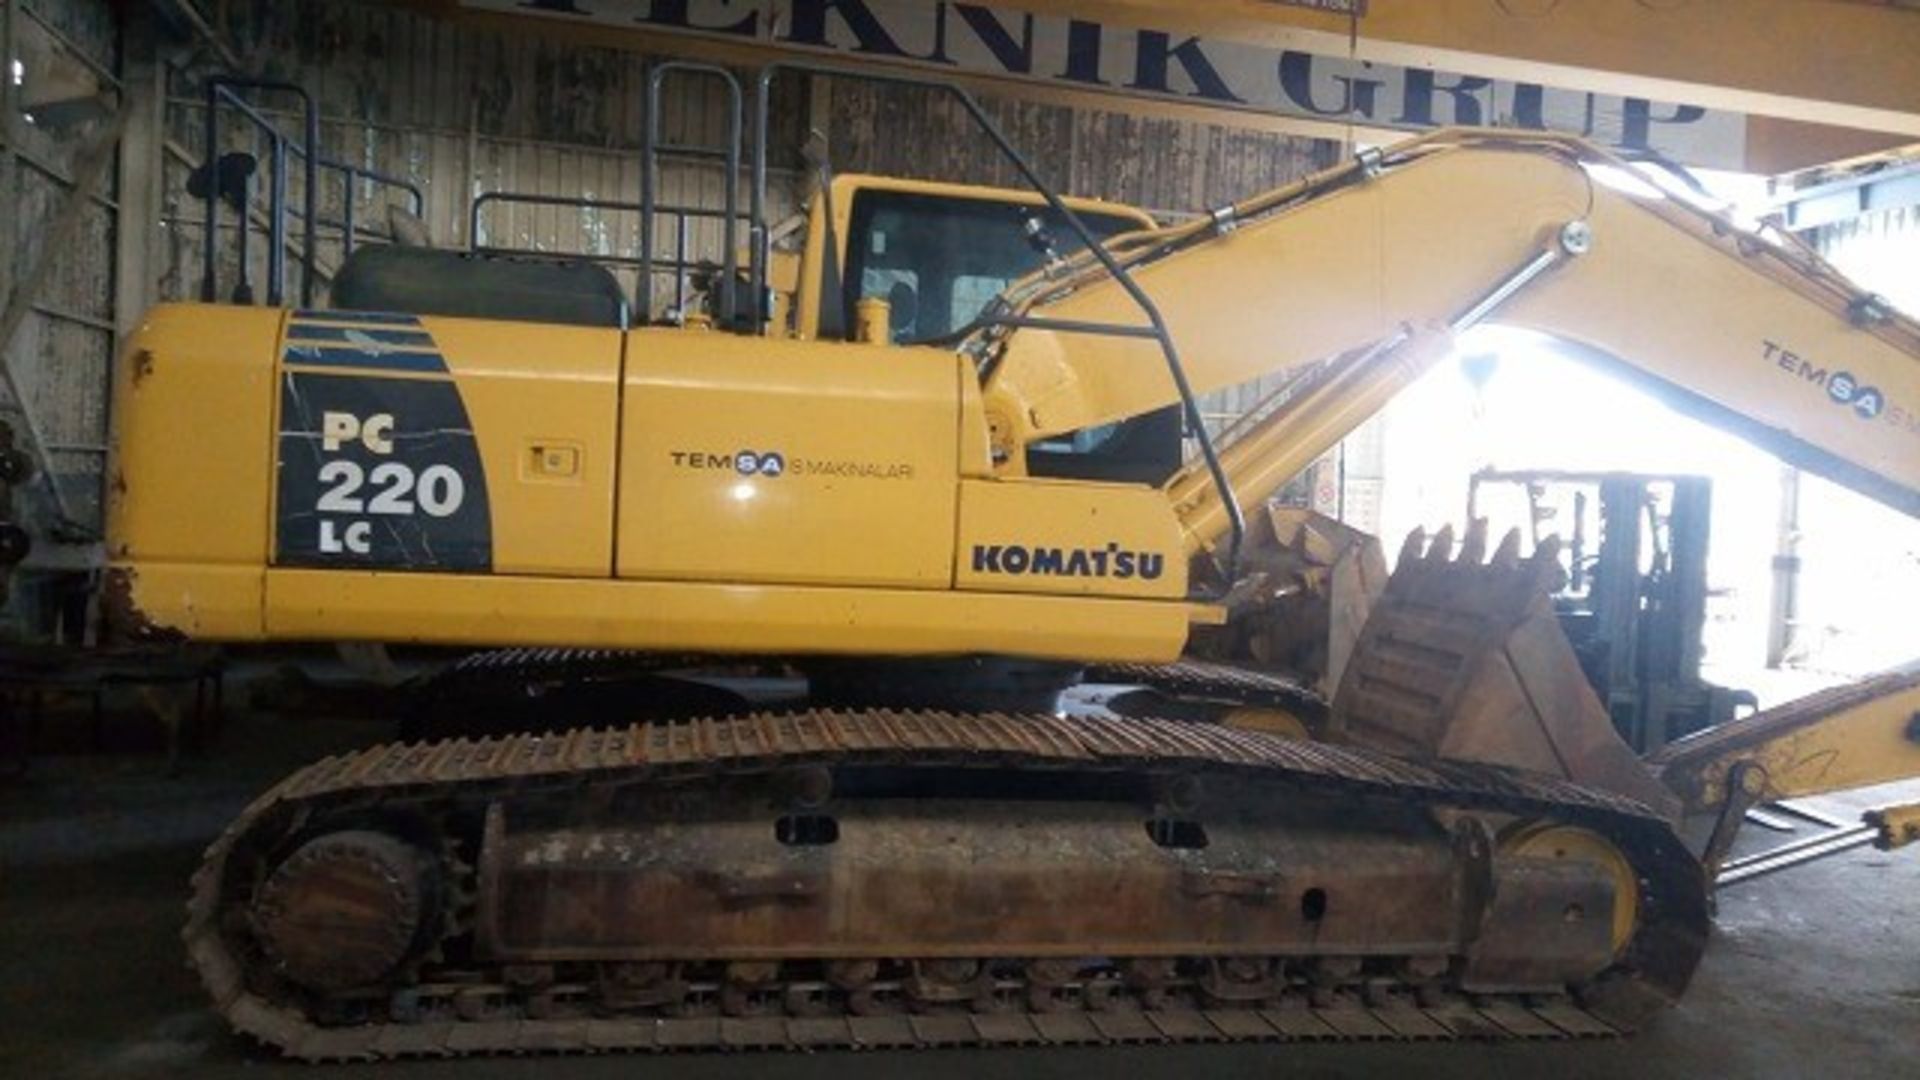 Komatsu PC220-8 Tracked Excavator - Image 5 of 10